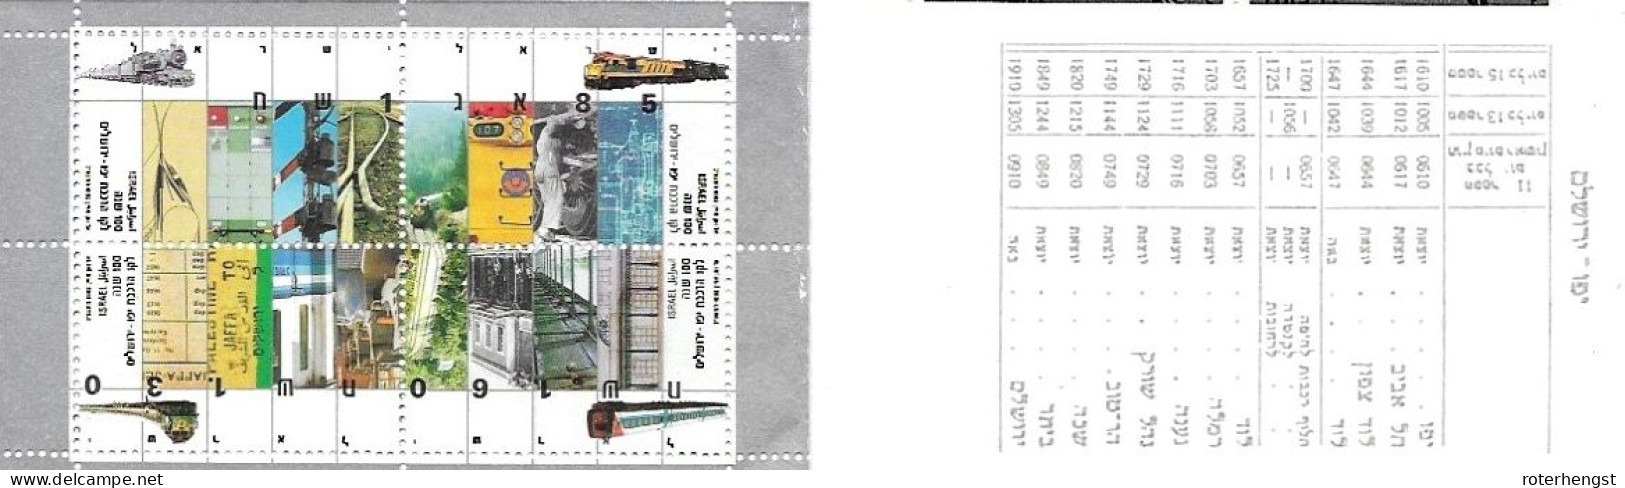 Israel Booklet Mnh ** 1992 15 Euros Train - Booklets